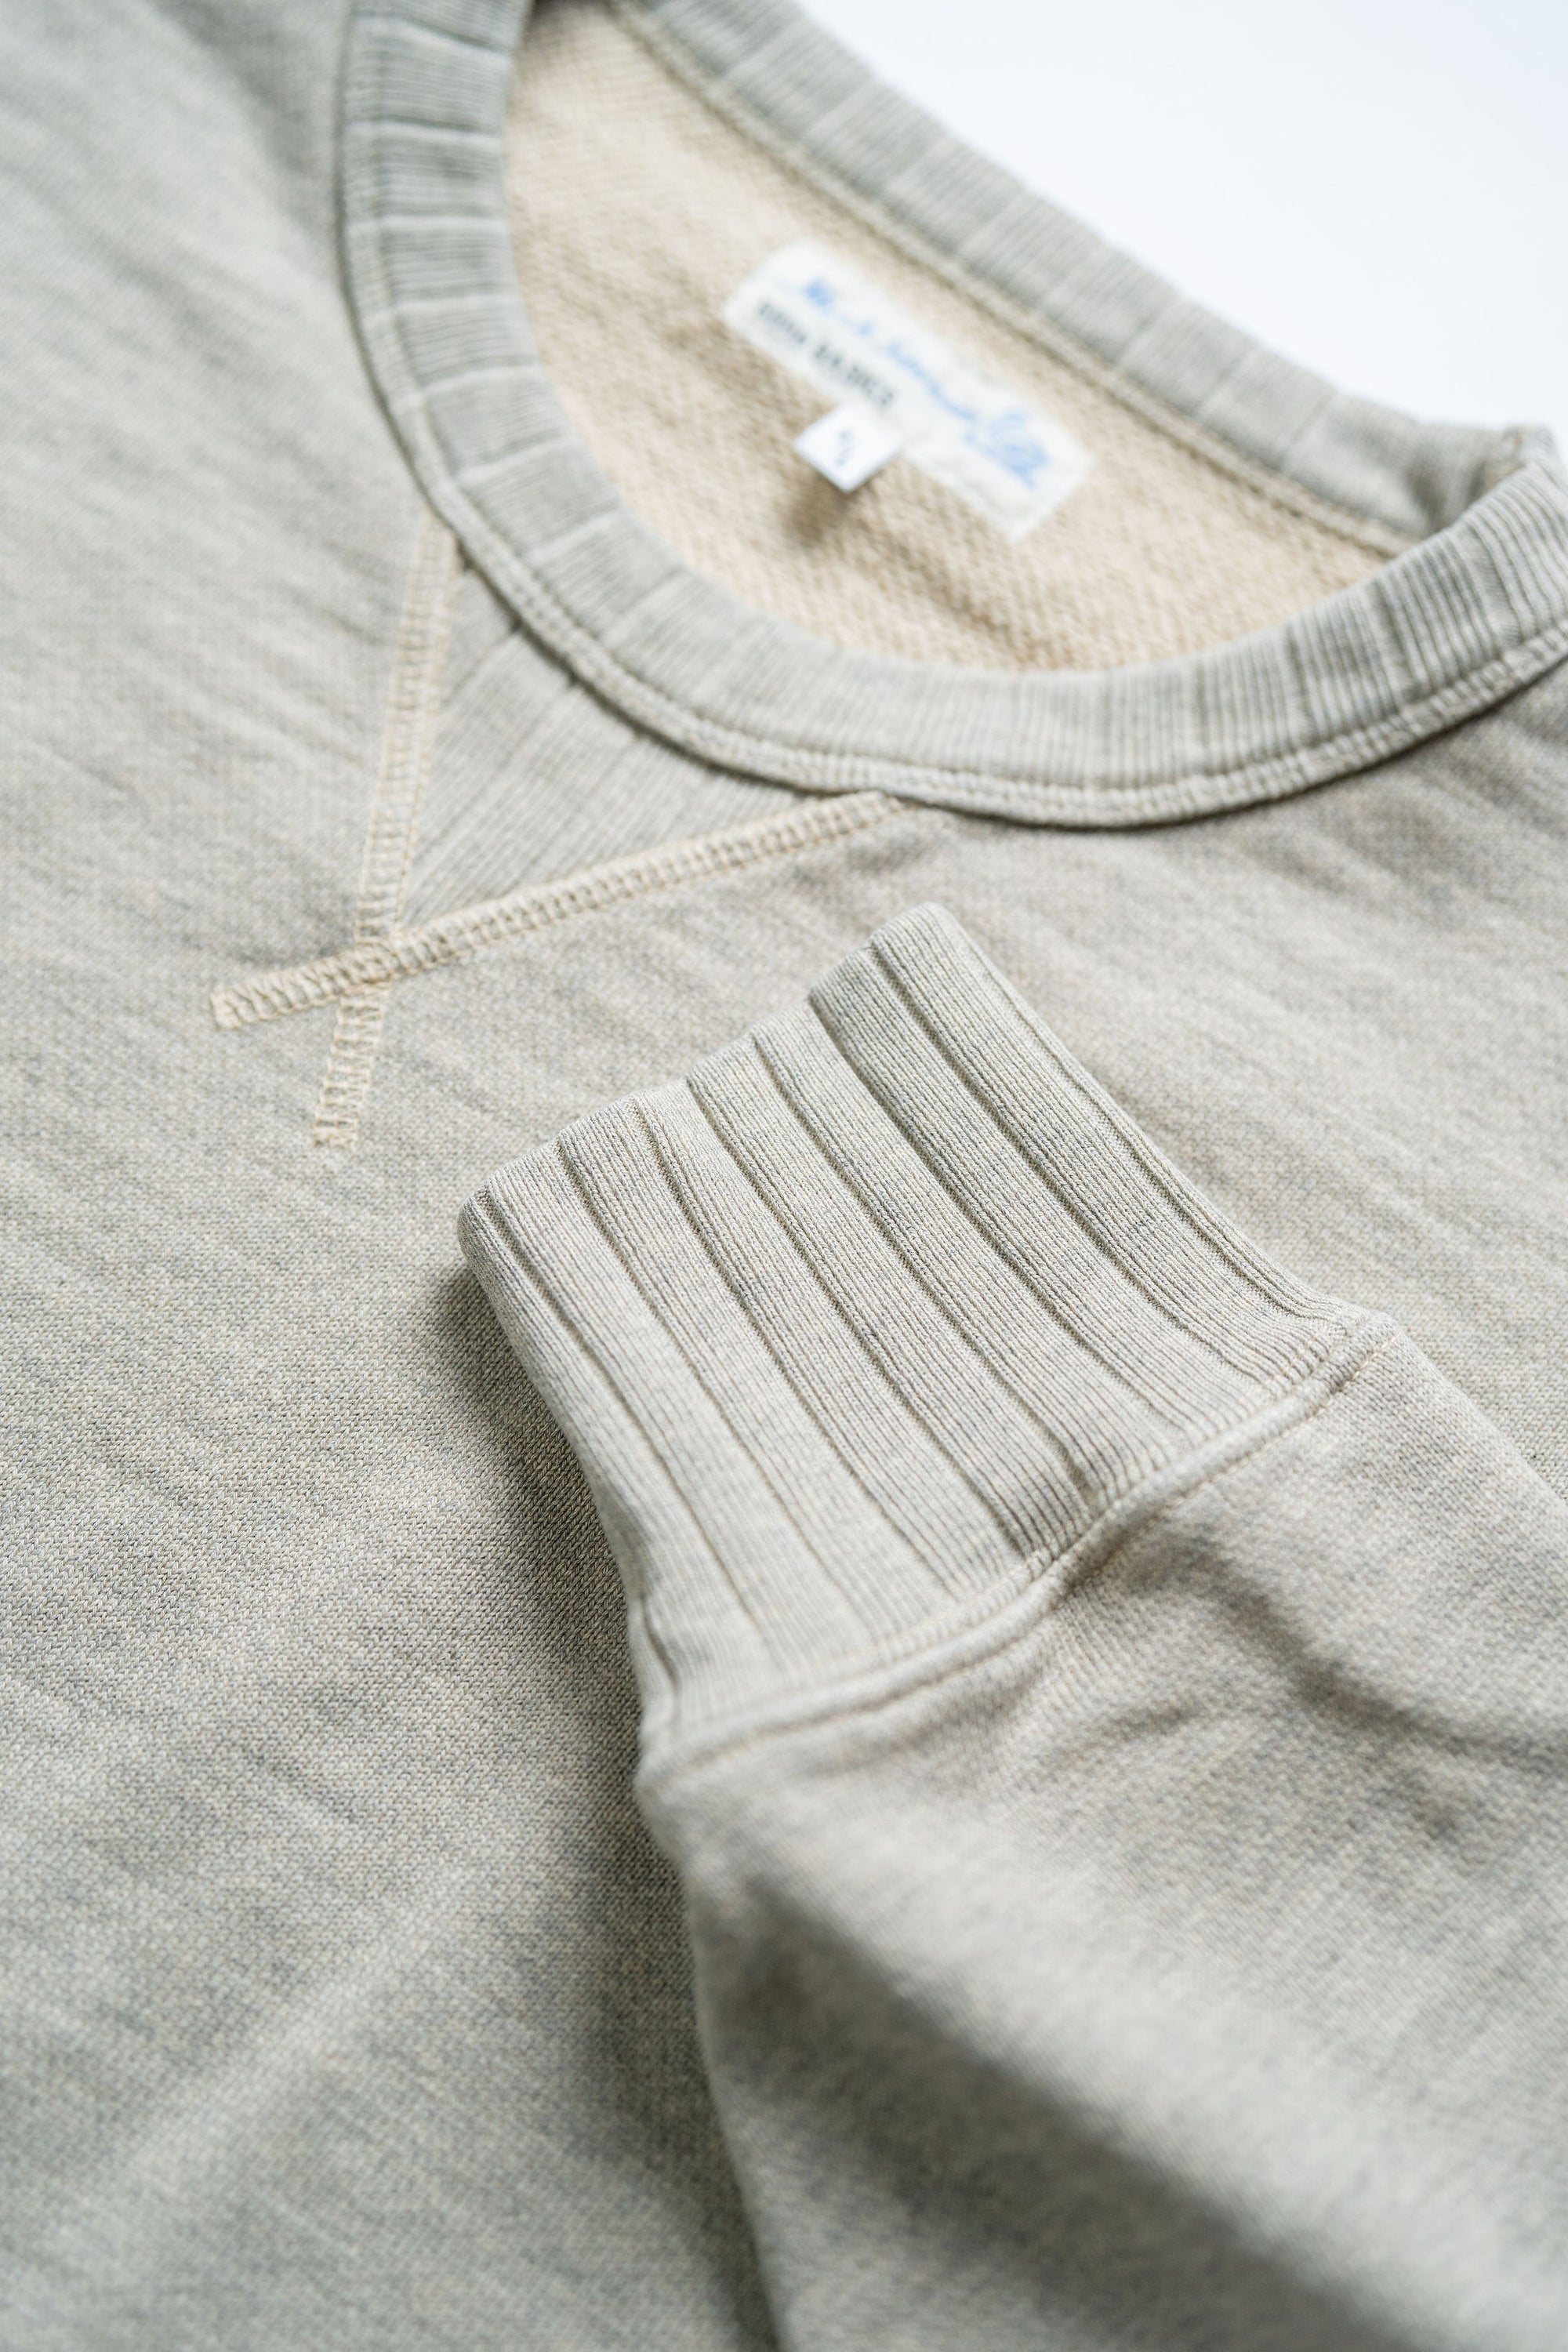 Merz b. Schwanen RFC01 Good Basics 19oz Relaxed Fit Sweatshirt - Vintage Grey Melange